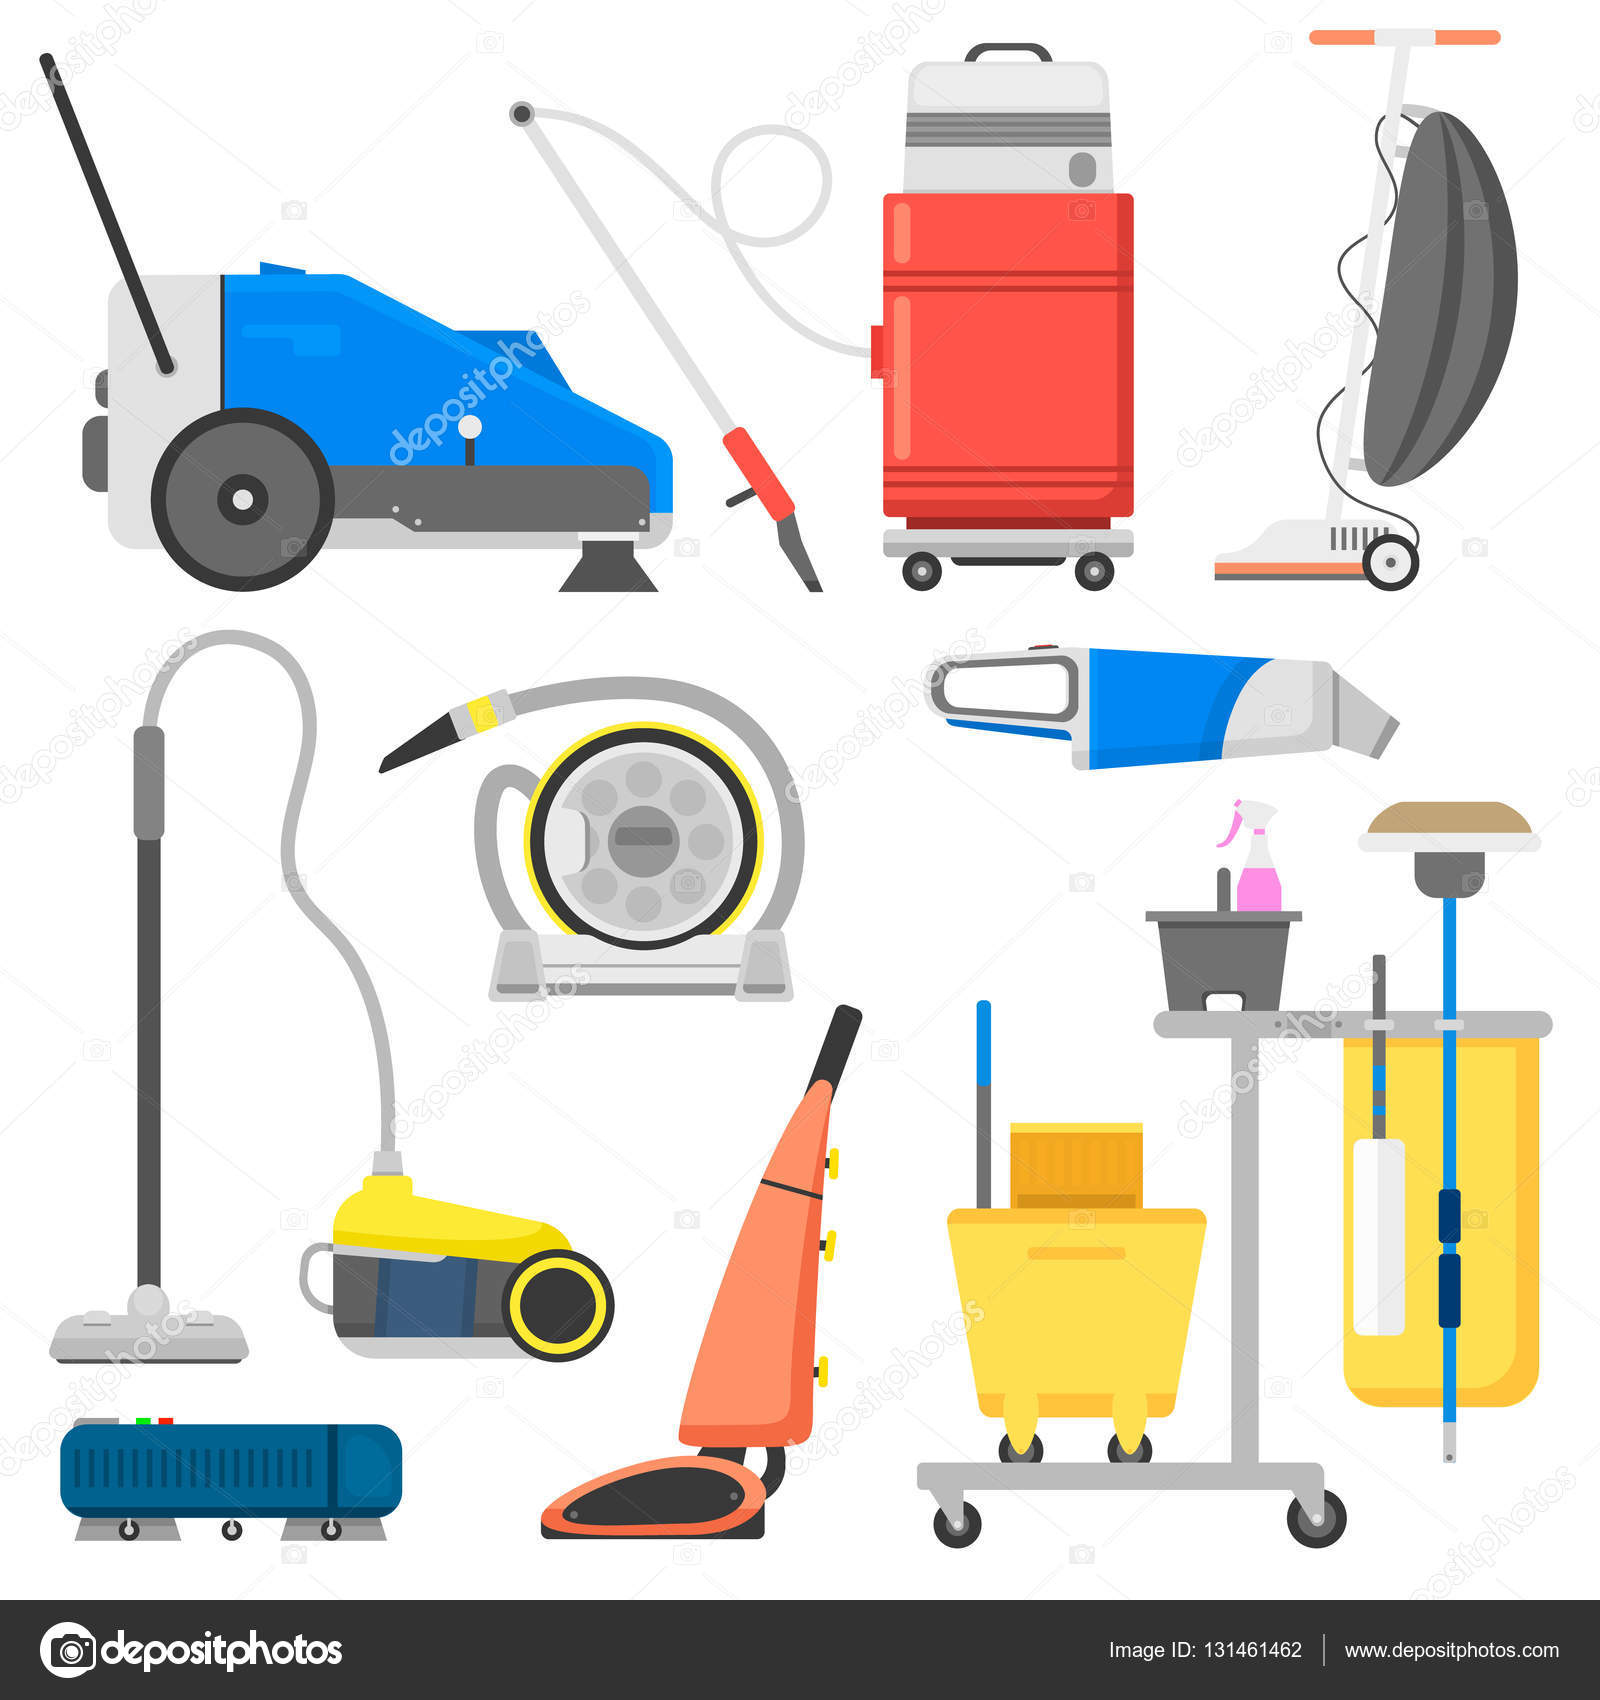 https://st3.depositphotos.com/8696740/13146/v/1600/depositphotos_131461462-stock-illustration-cleaning-equipment-vector-set.jpg